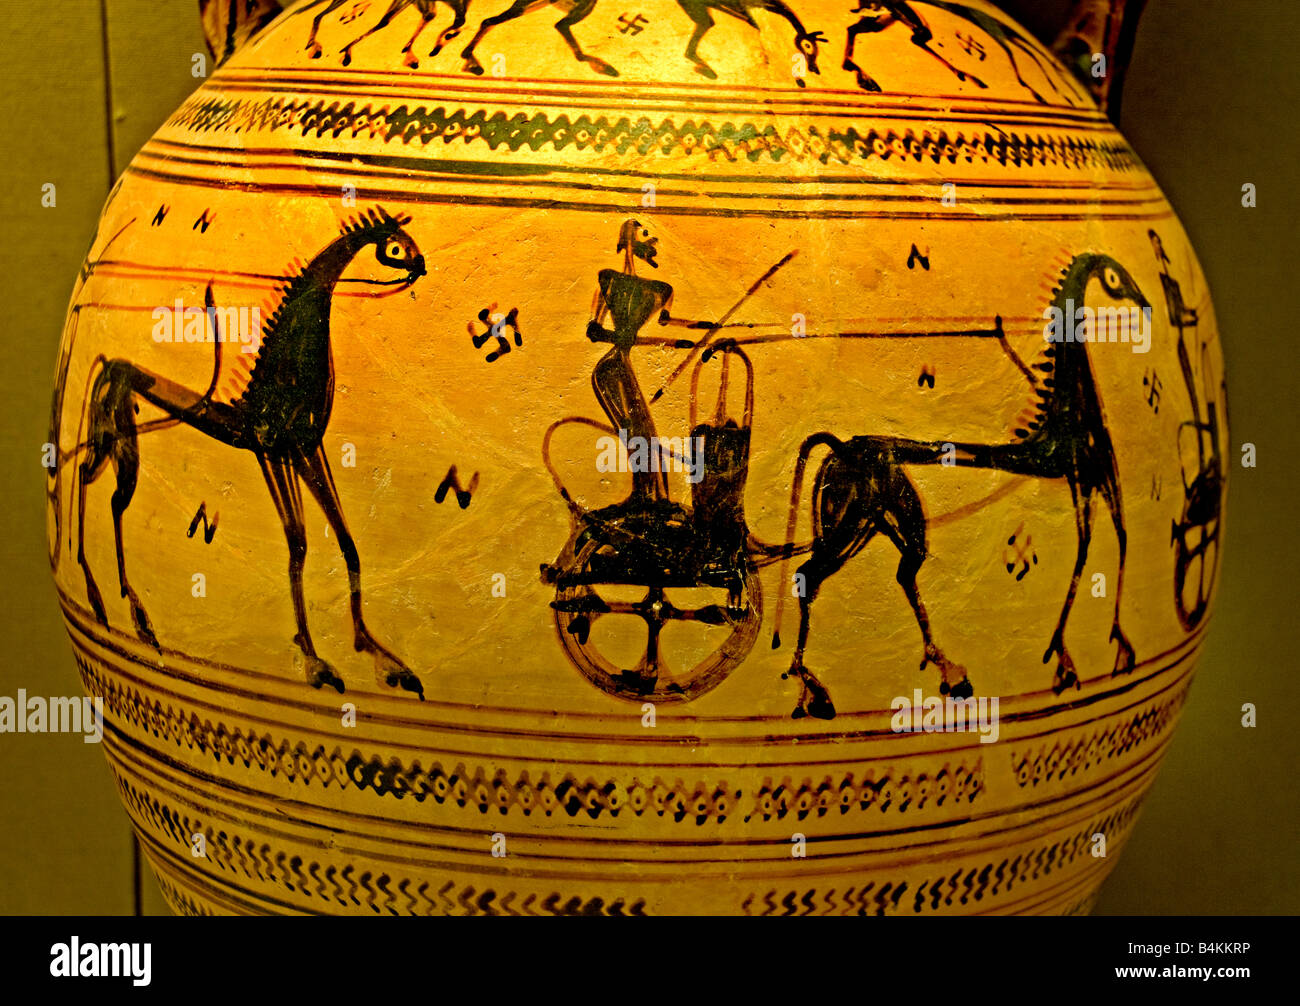 Amphora jar lion attack deer Athens 700 BC N Painter Stock Photo